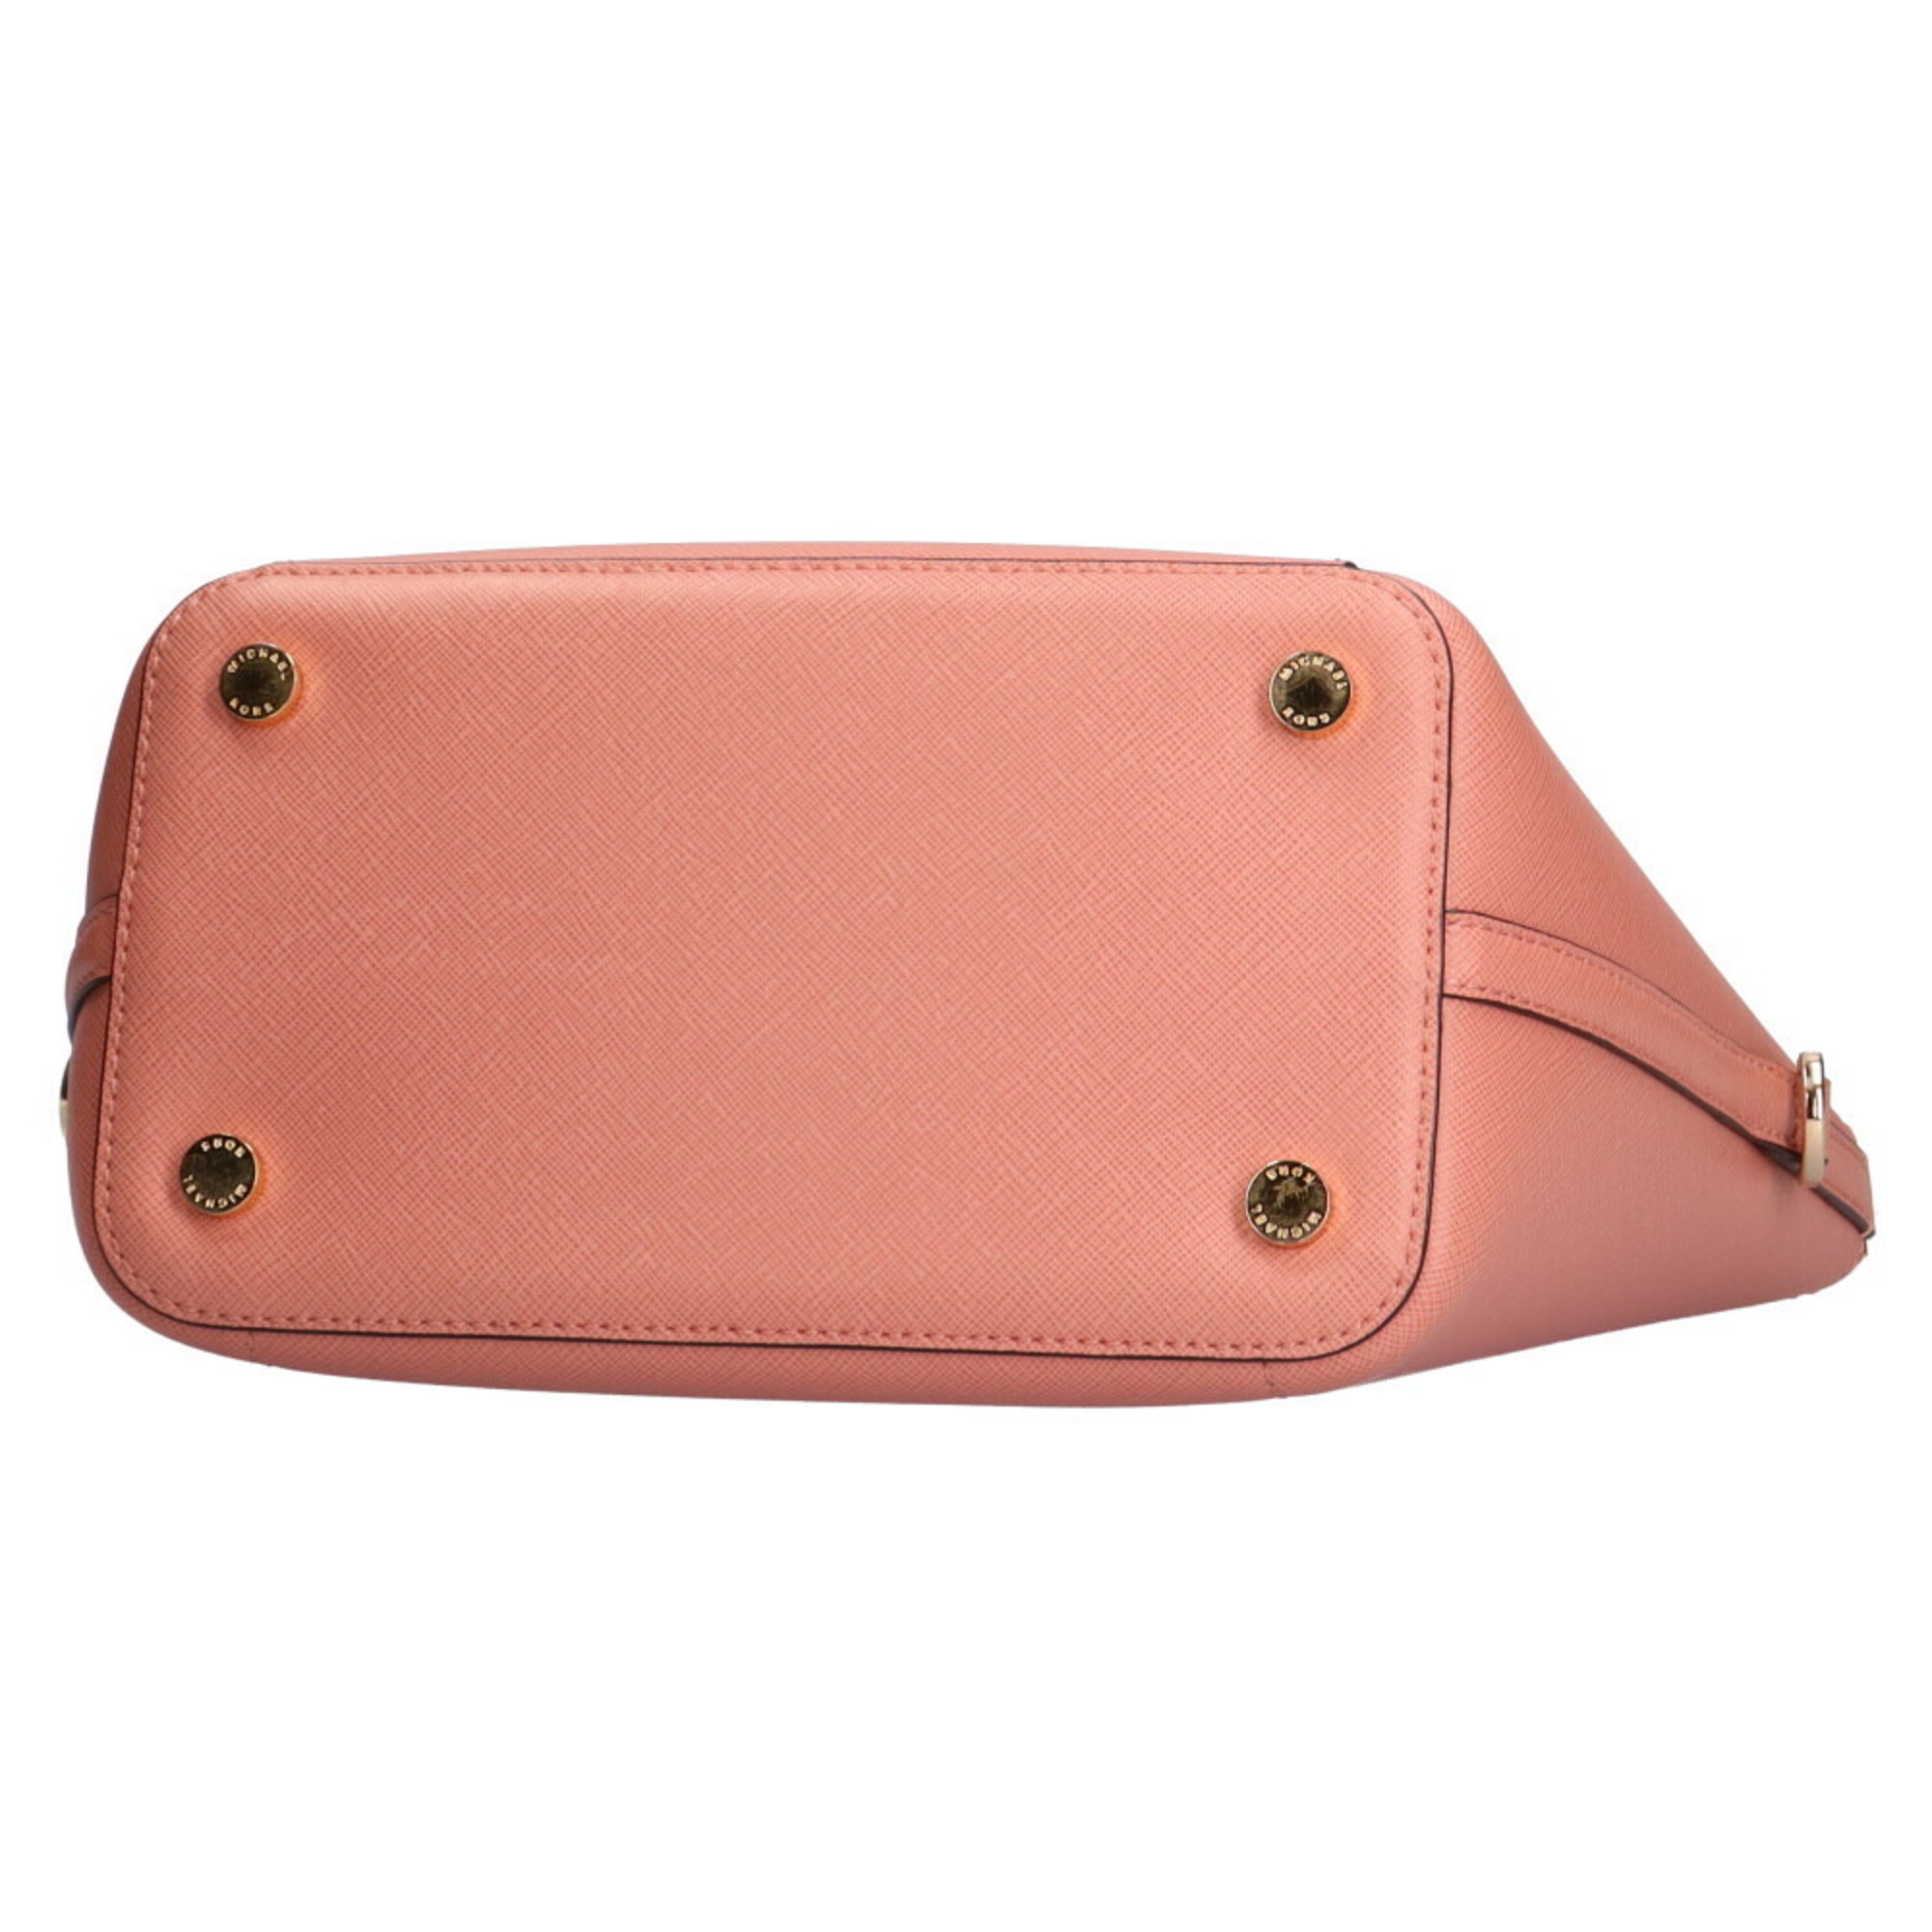 Michael Kors shoulder bag leather pink ladies